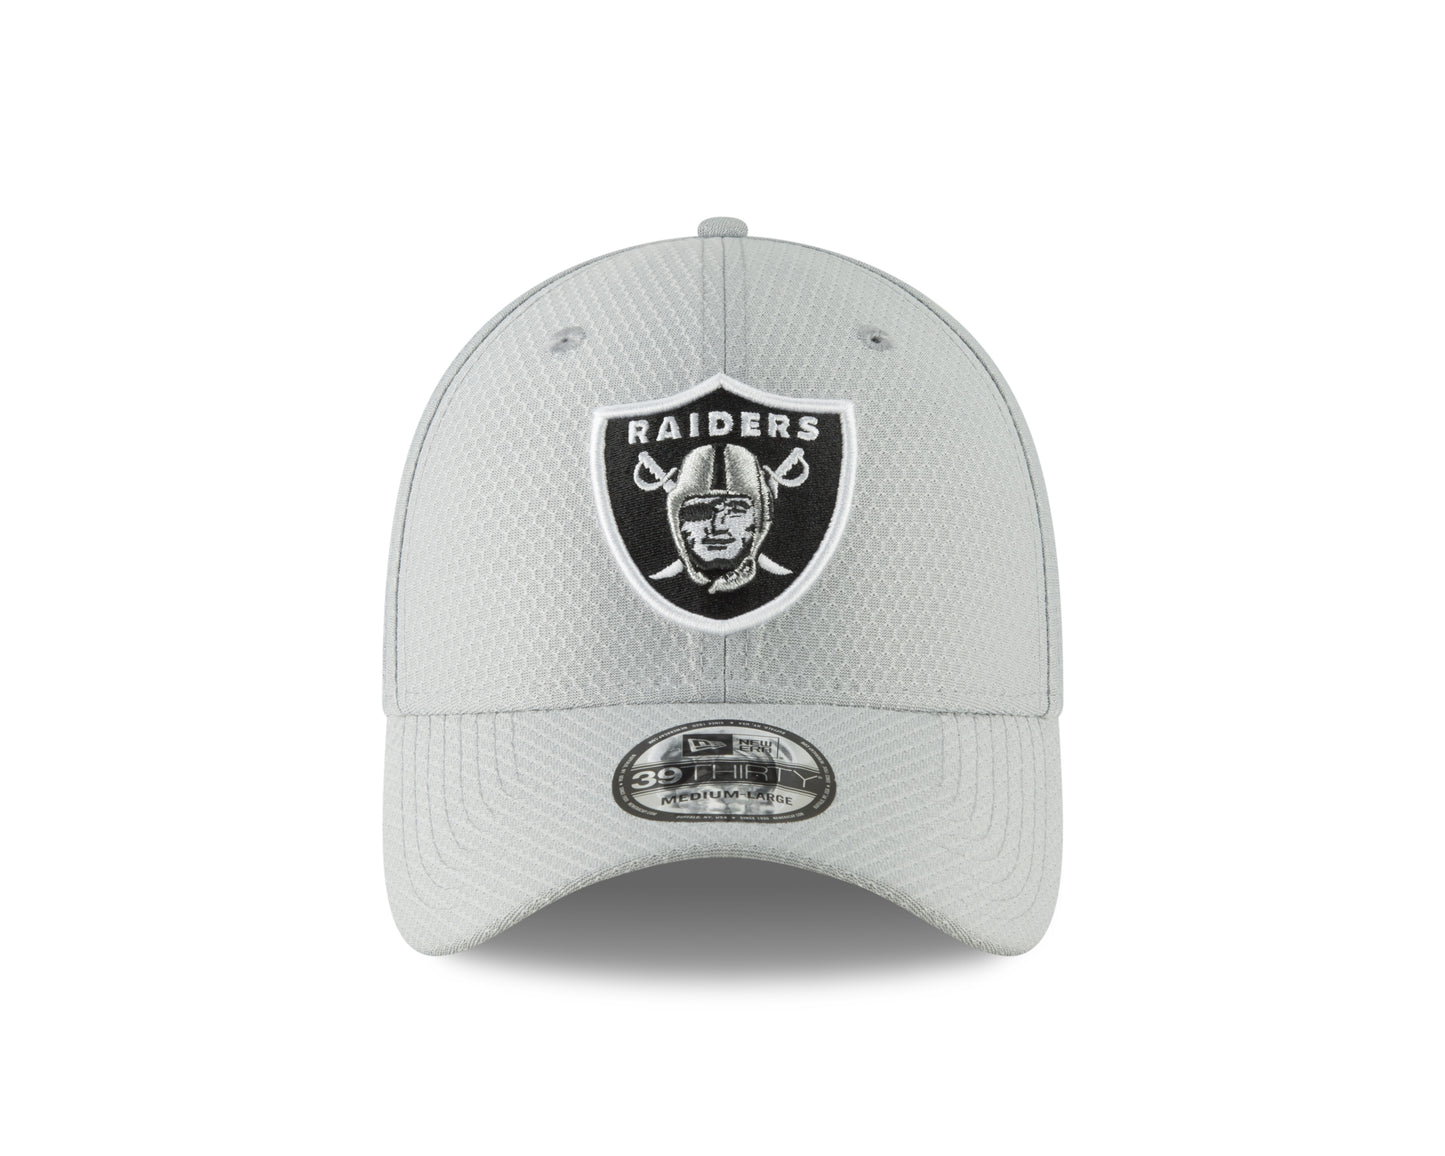 Oakland Raiders New Era Crucial Catch 39THIRTY Flex Hat - Gray